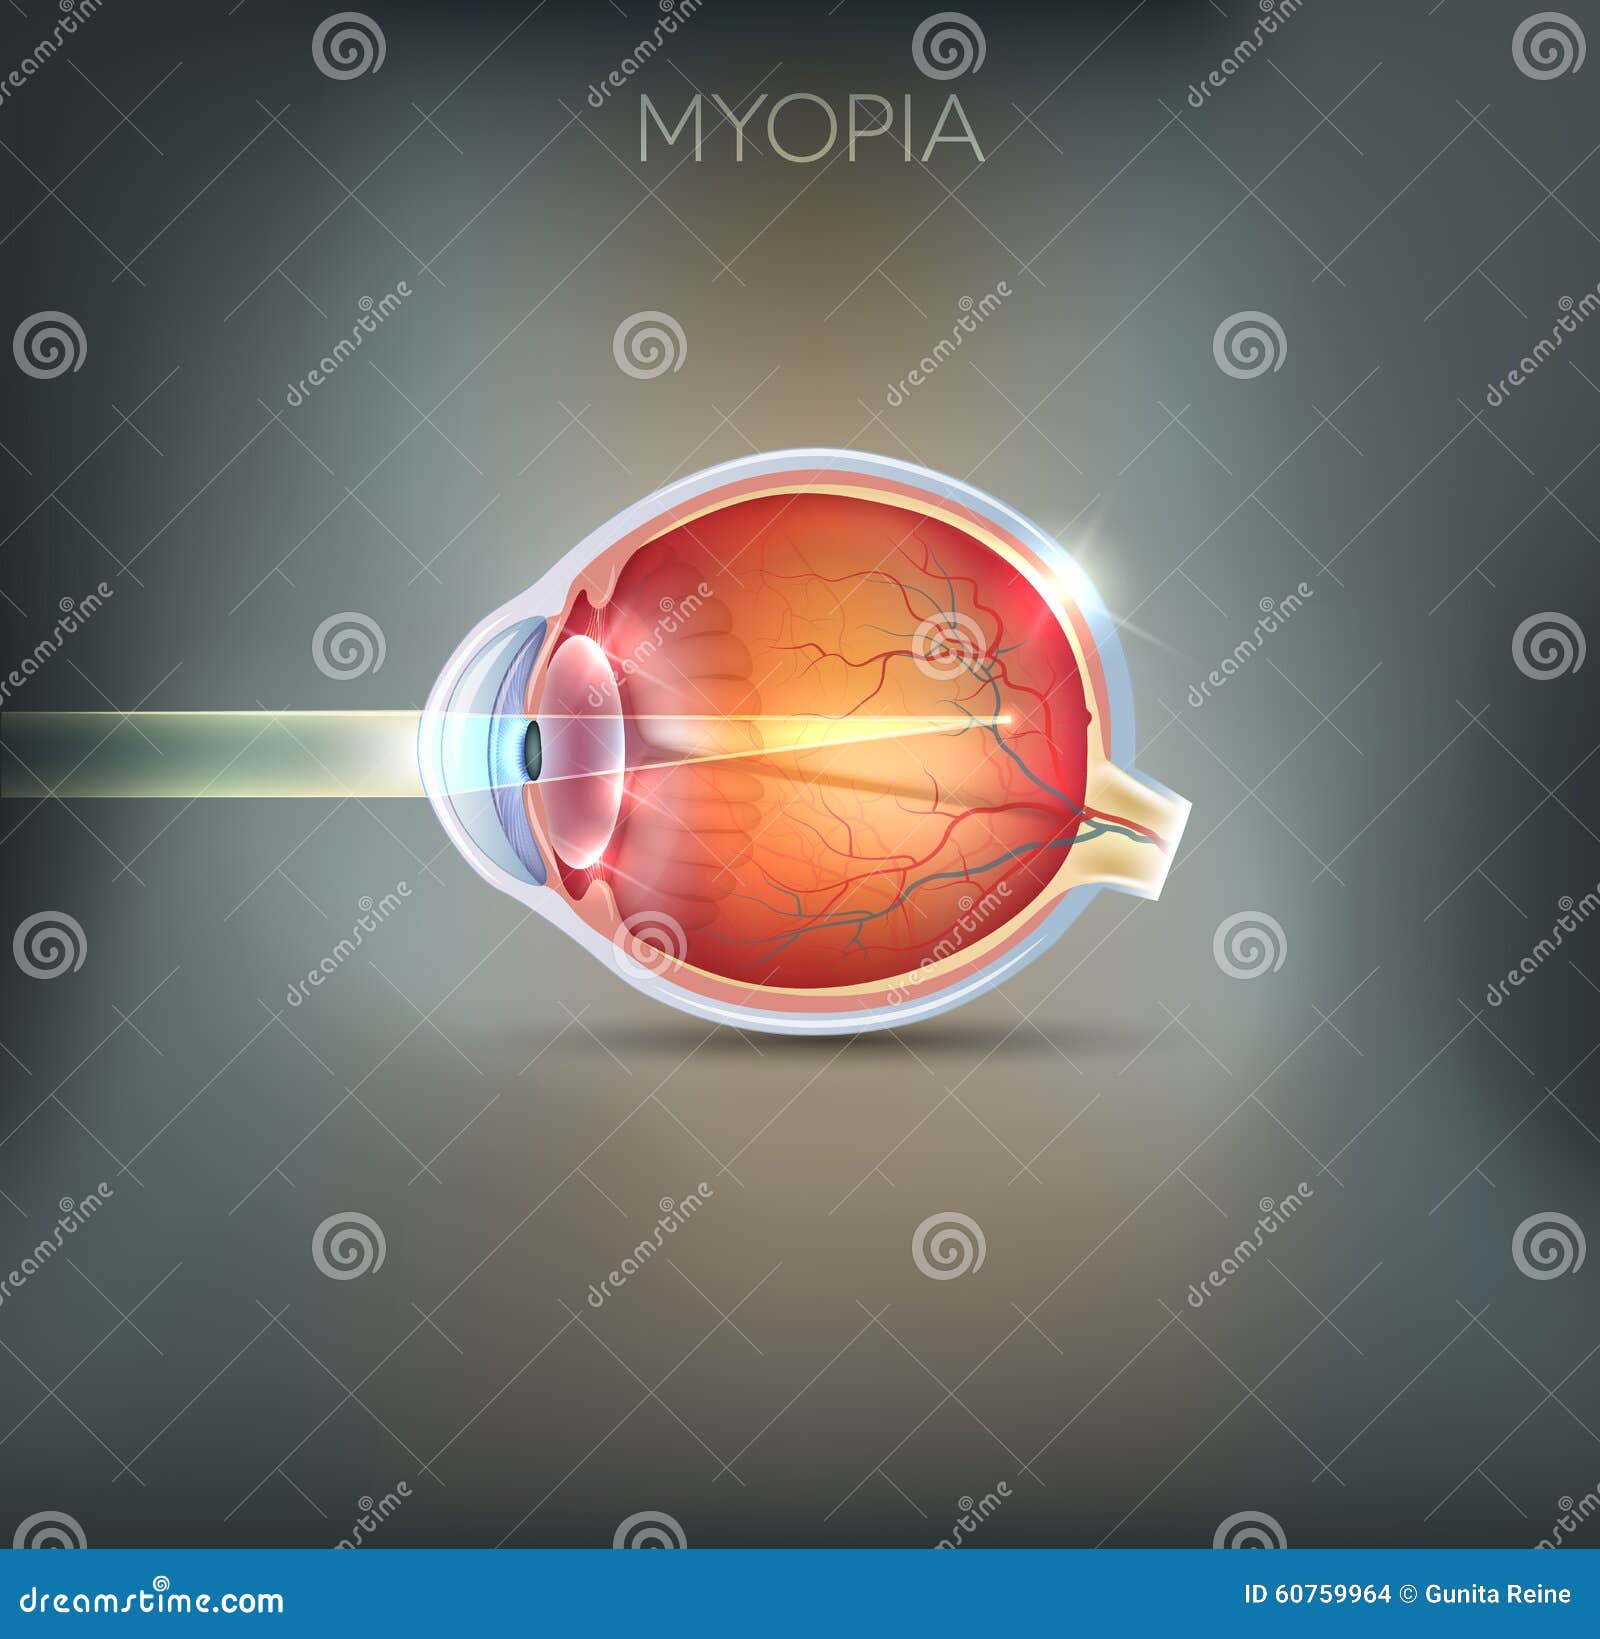 myopia, vision disorder